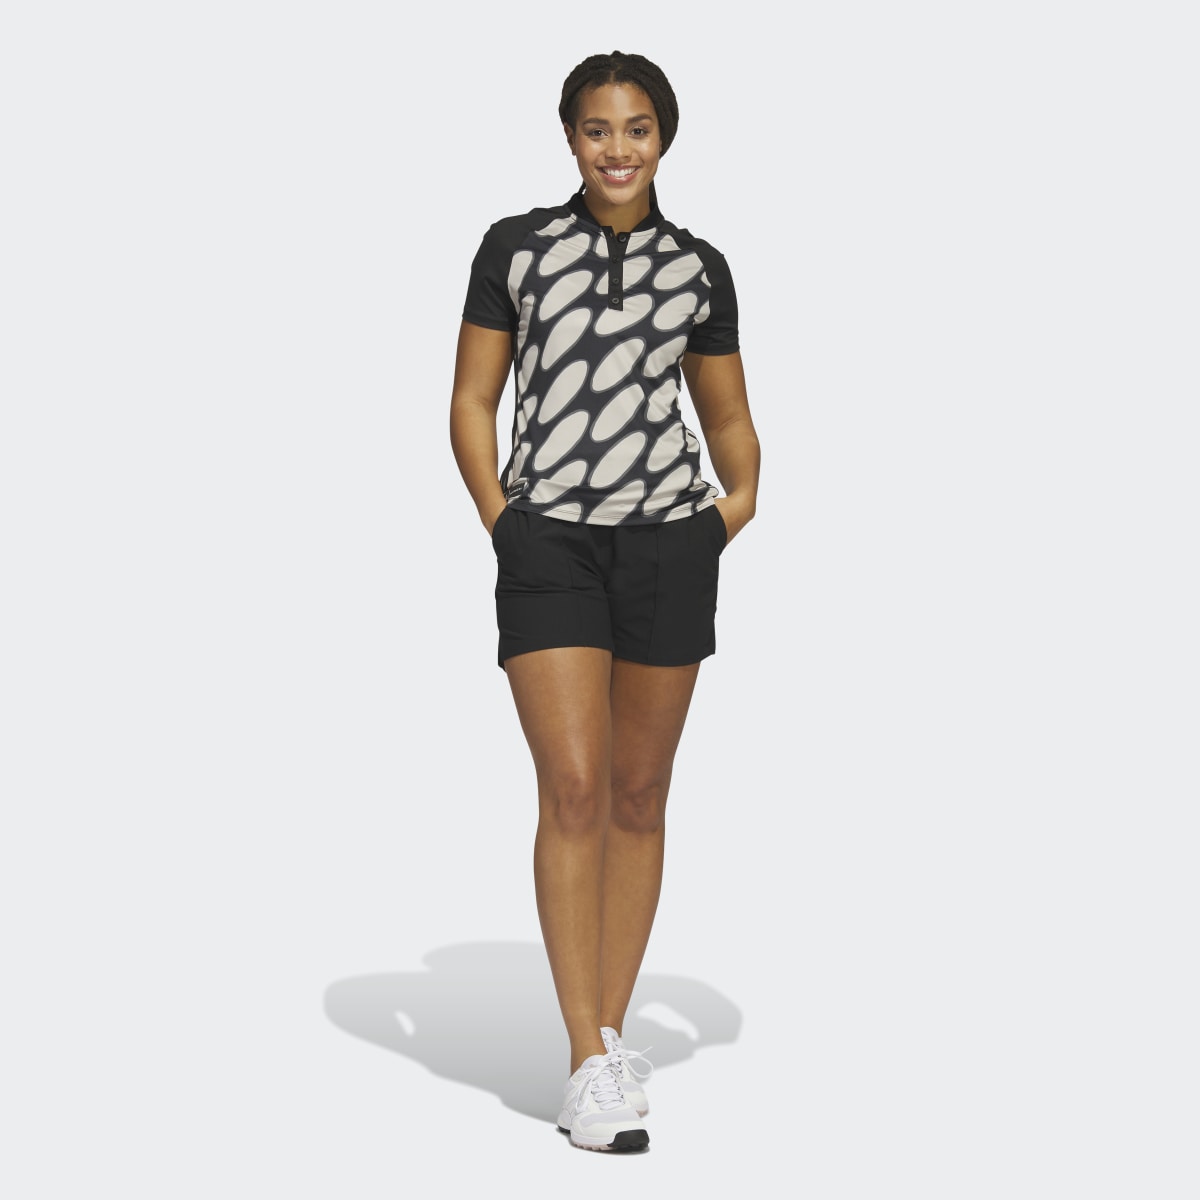 Adidas Marimekko Polo Shirt. 6